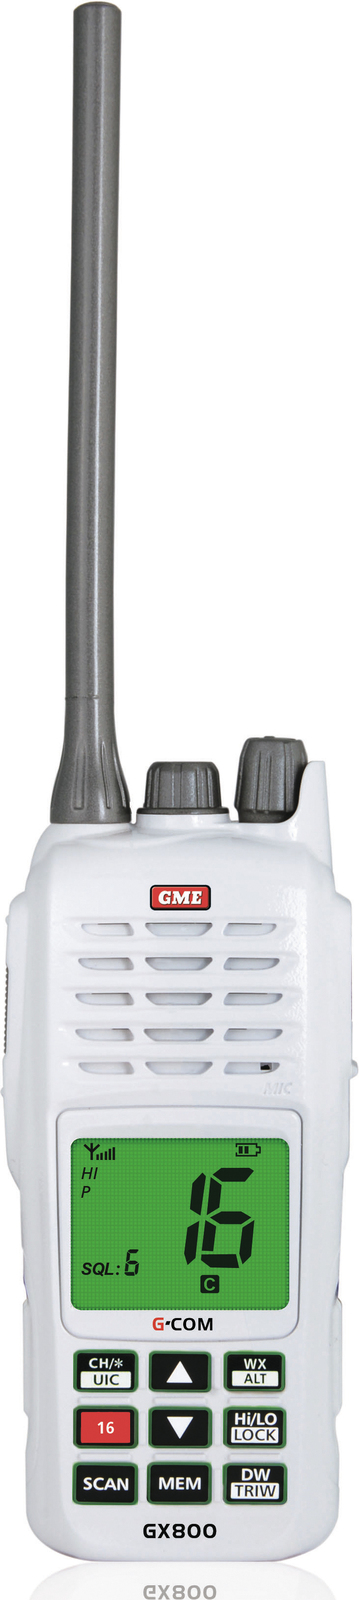 GME GX800 Hand Held VHF 5 Watt Radio, Rechargeable, Waterproof To IP67